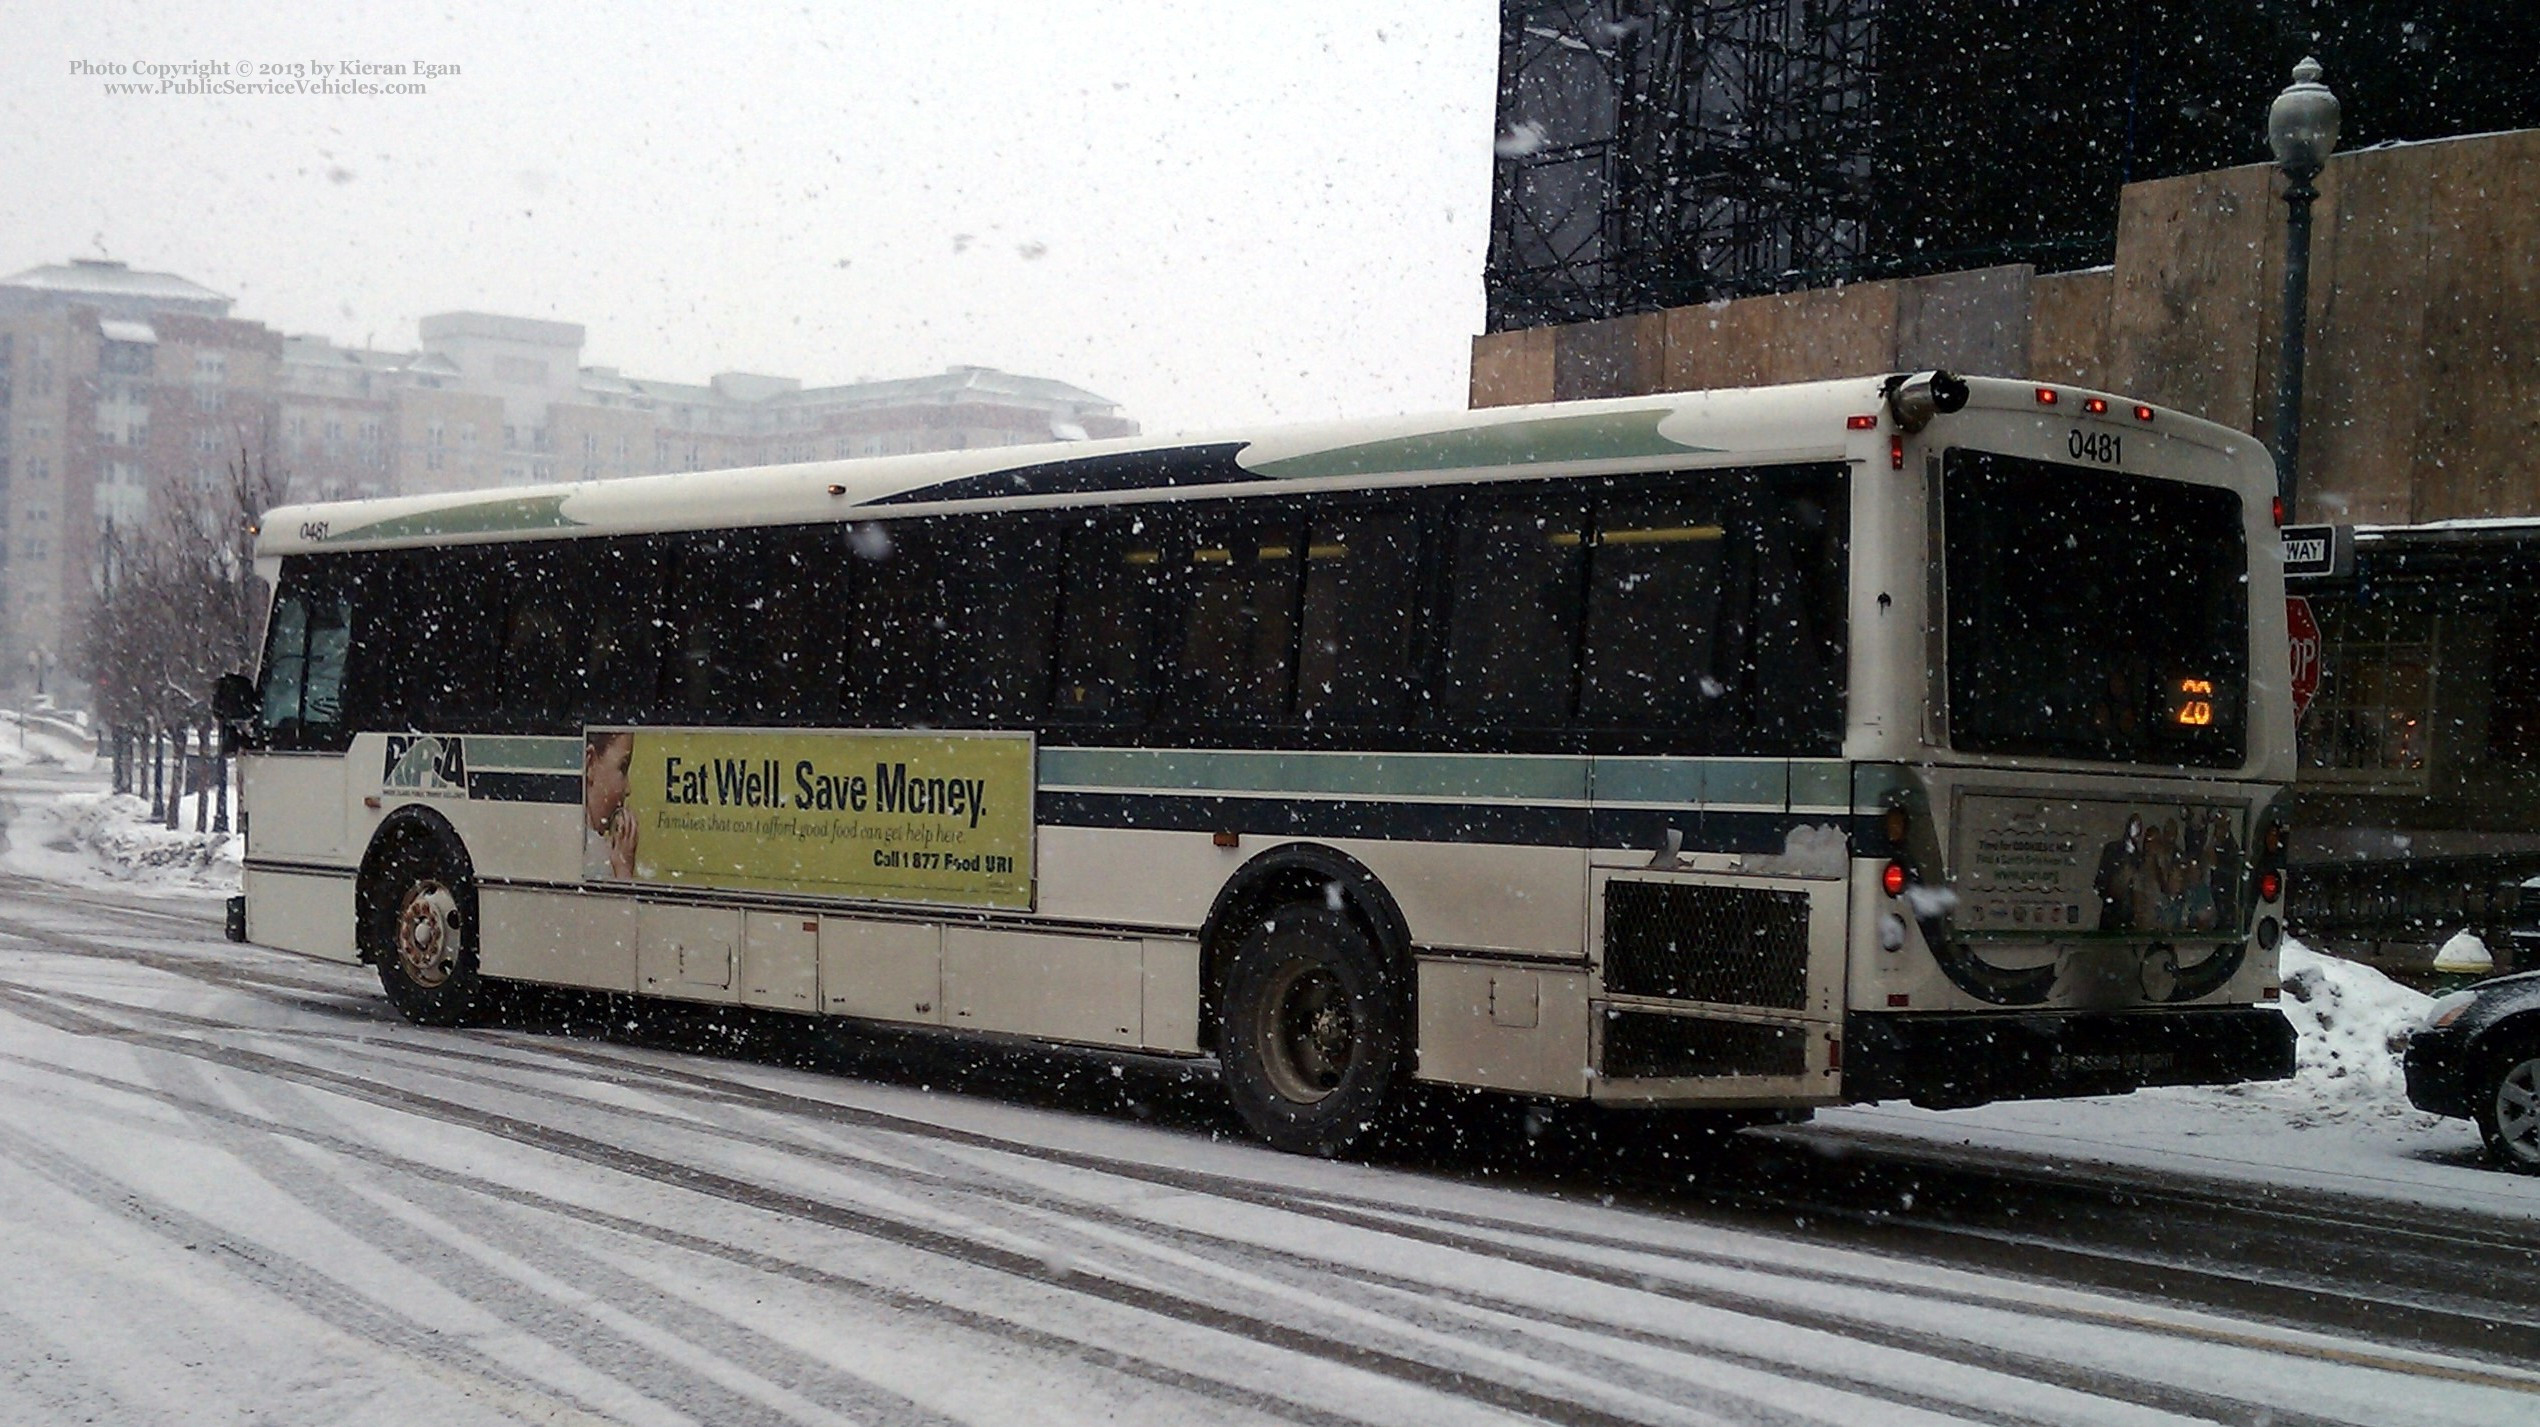 A photo  of Rhode Island Public Transit Authority
            Bus 0481, a 2004 Orion V 05.501             taken by Kieran Egan